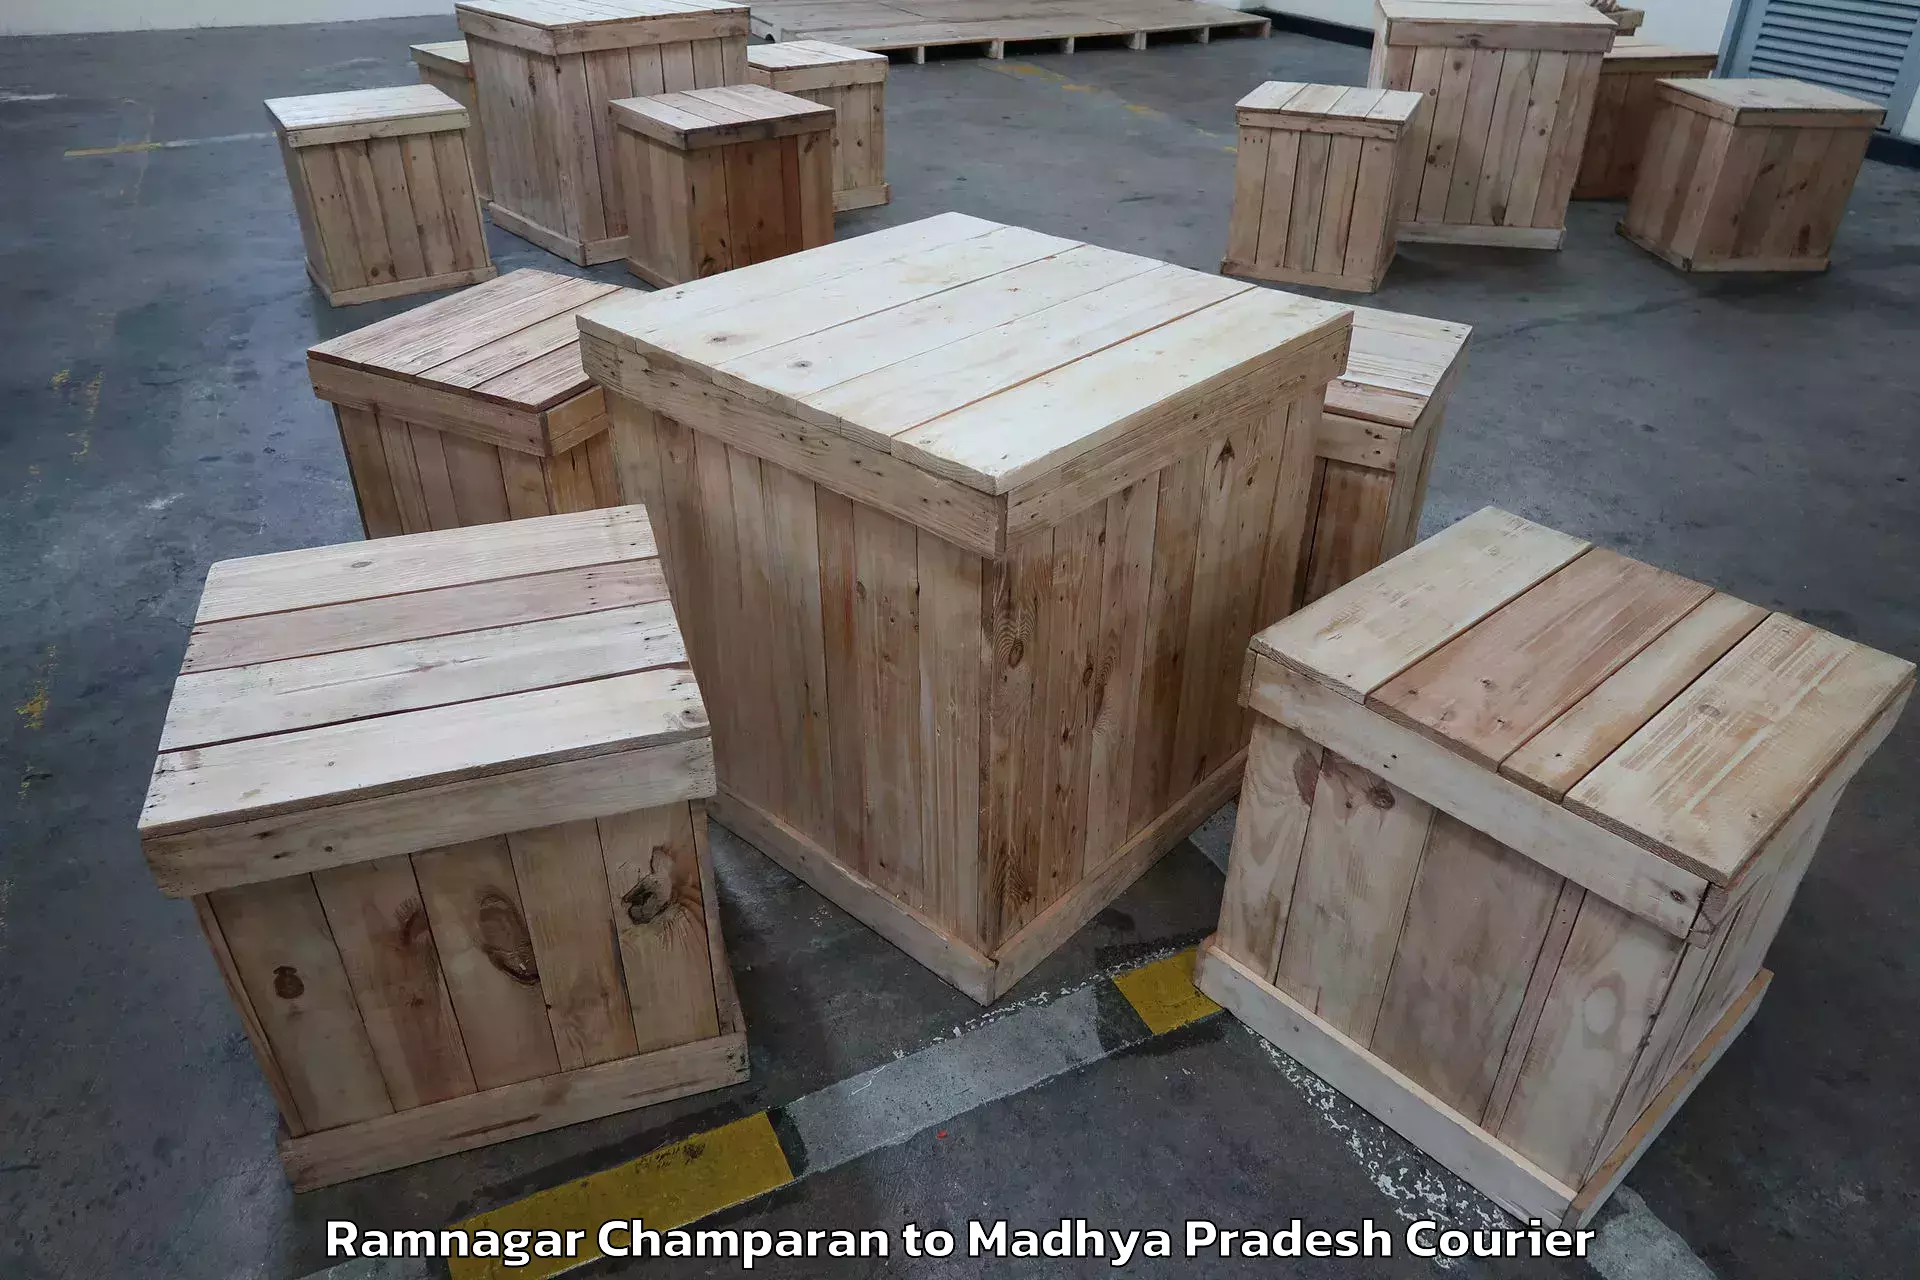 Professional moving company Ramnagar Champaran to Dindori